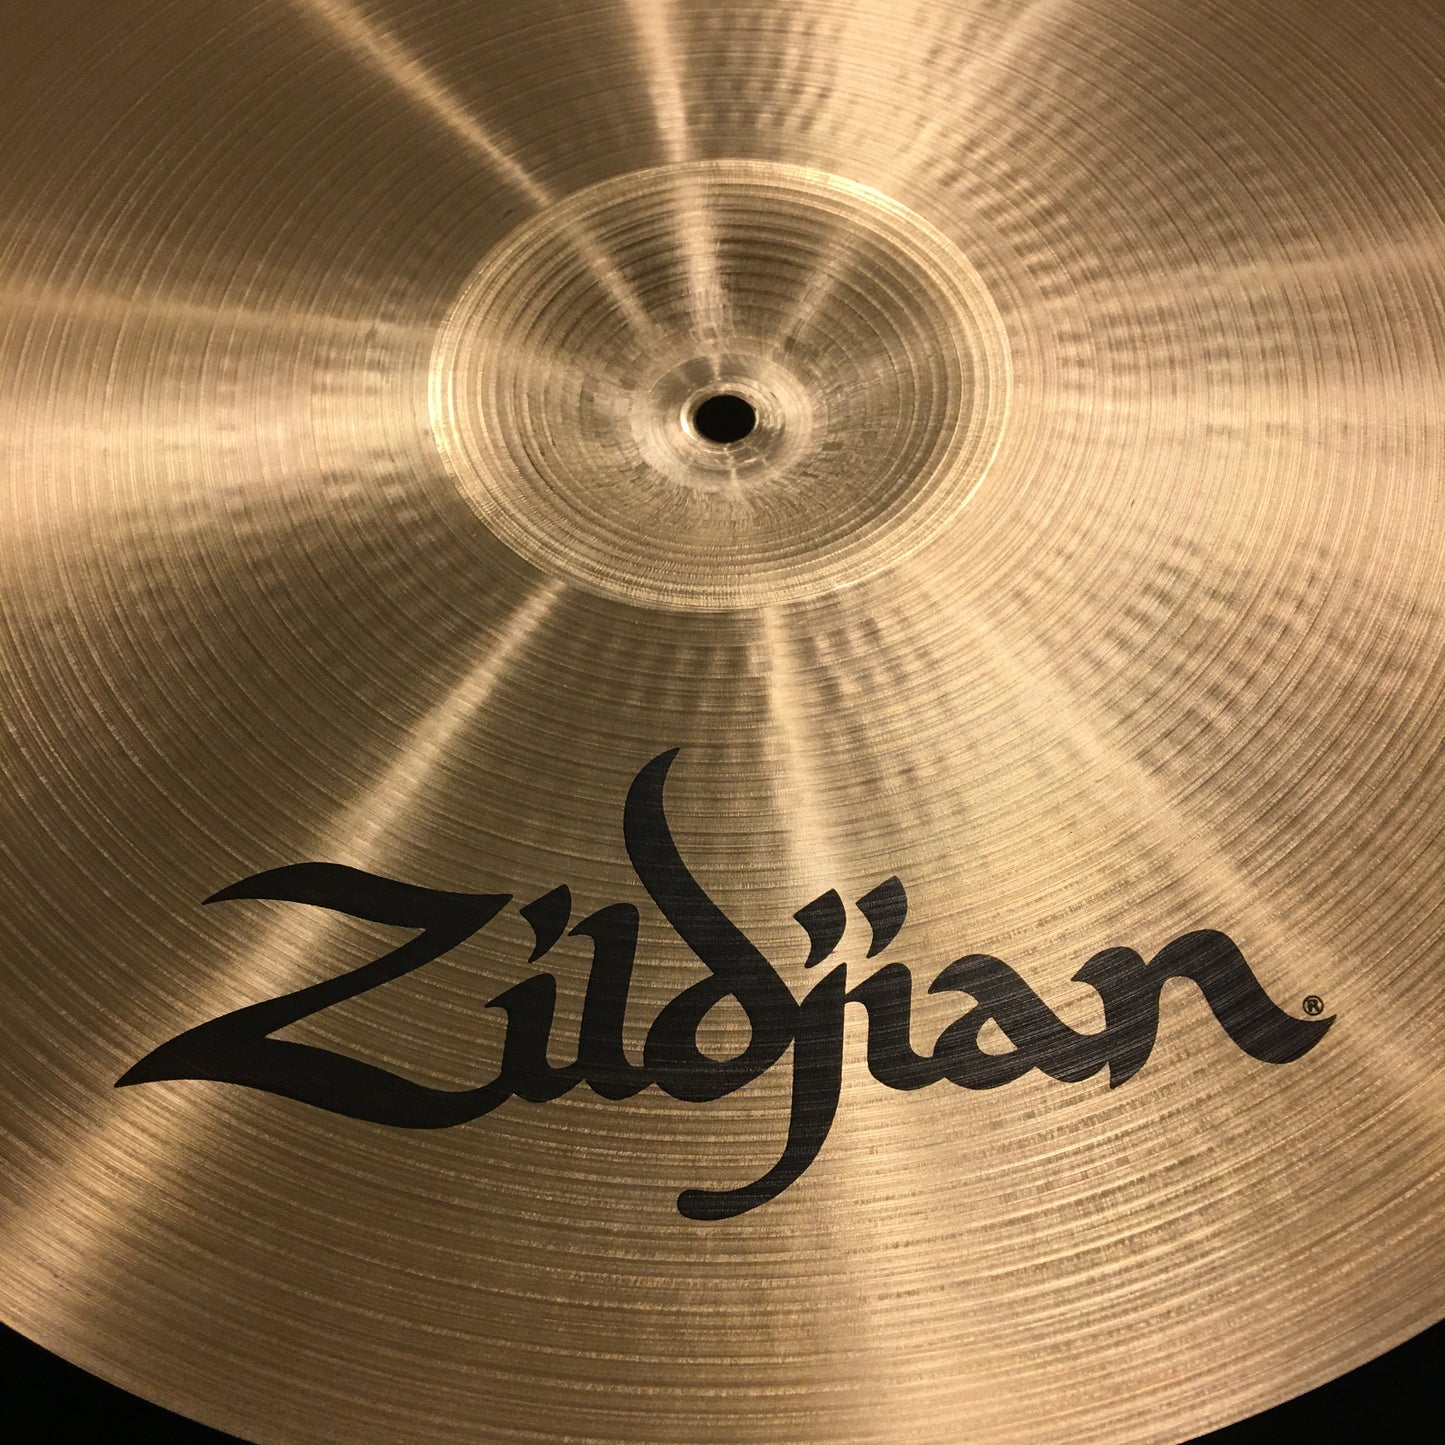 17" Zildjian A Avidis Thin Crash Cymbal 1246g